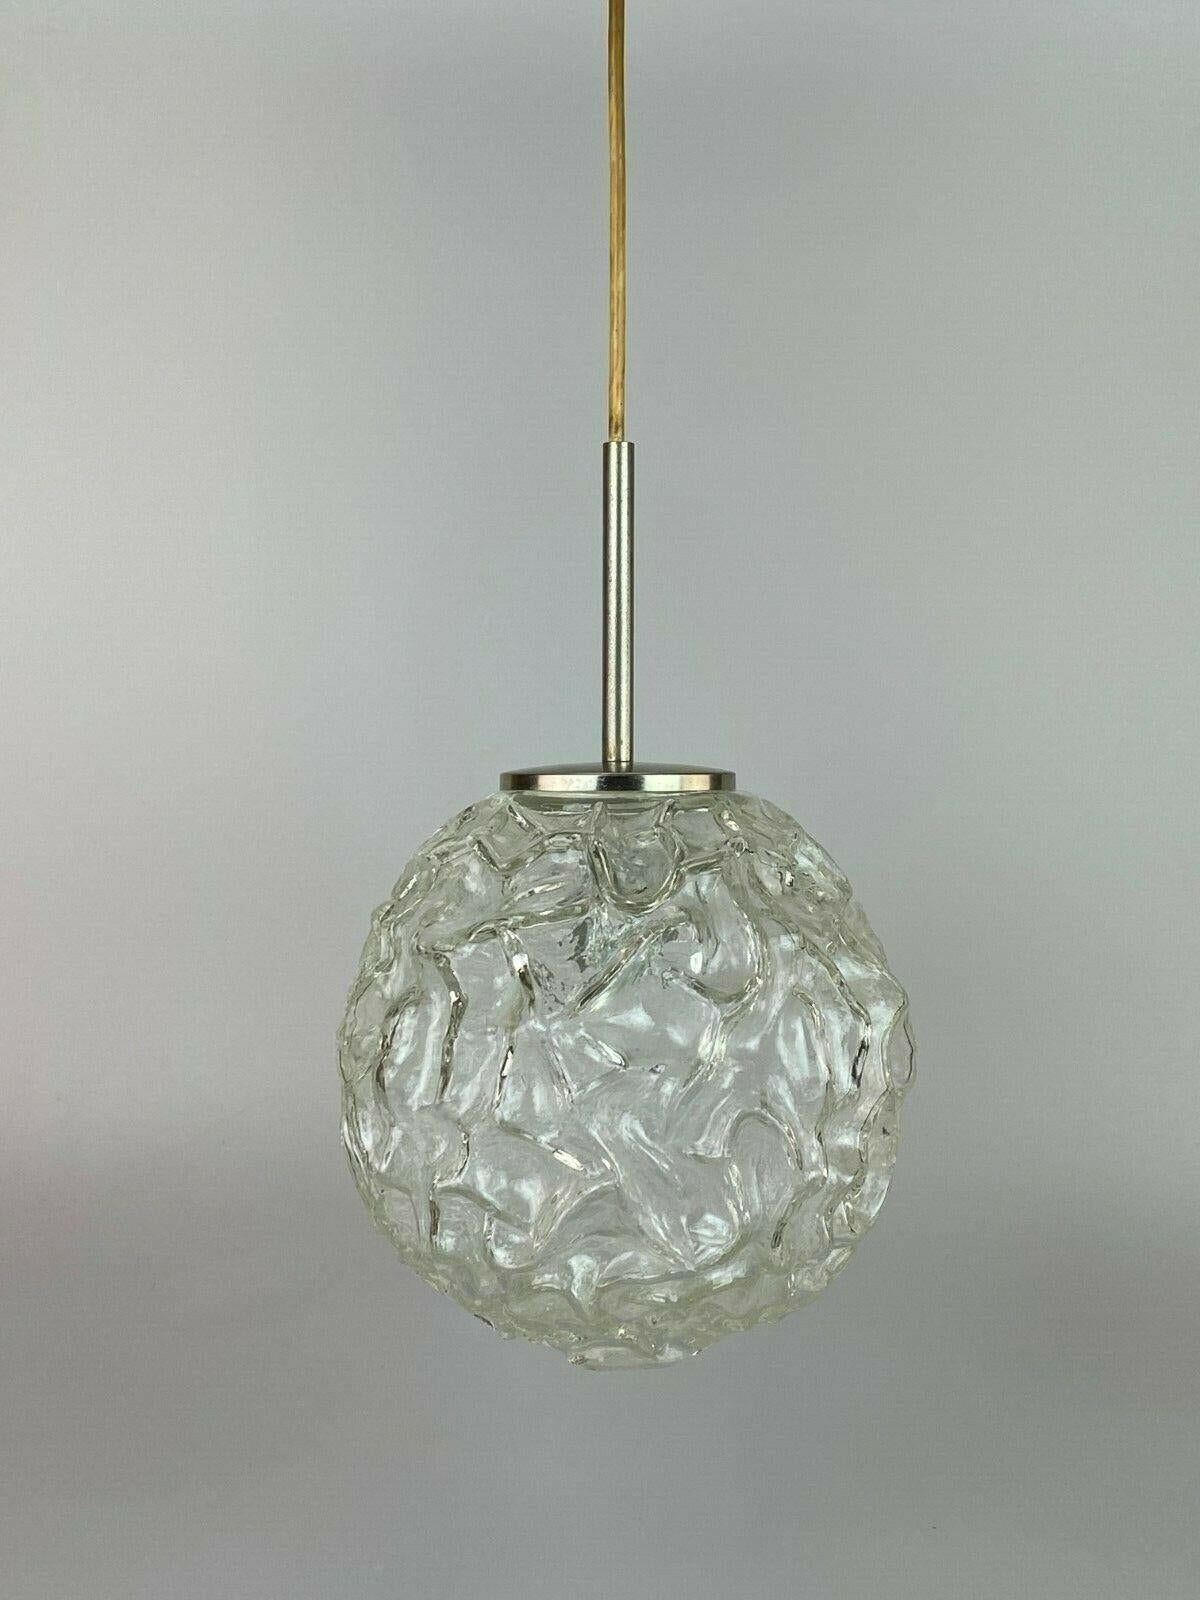 70s hanging lamp